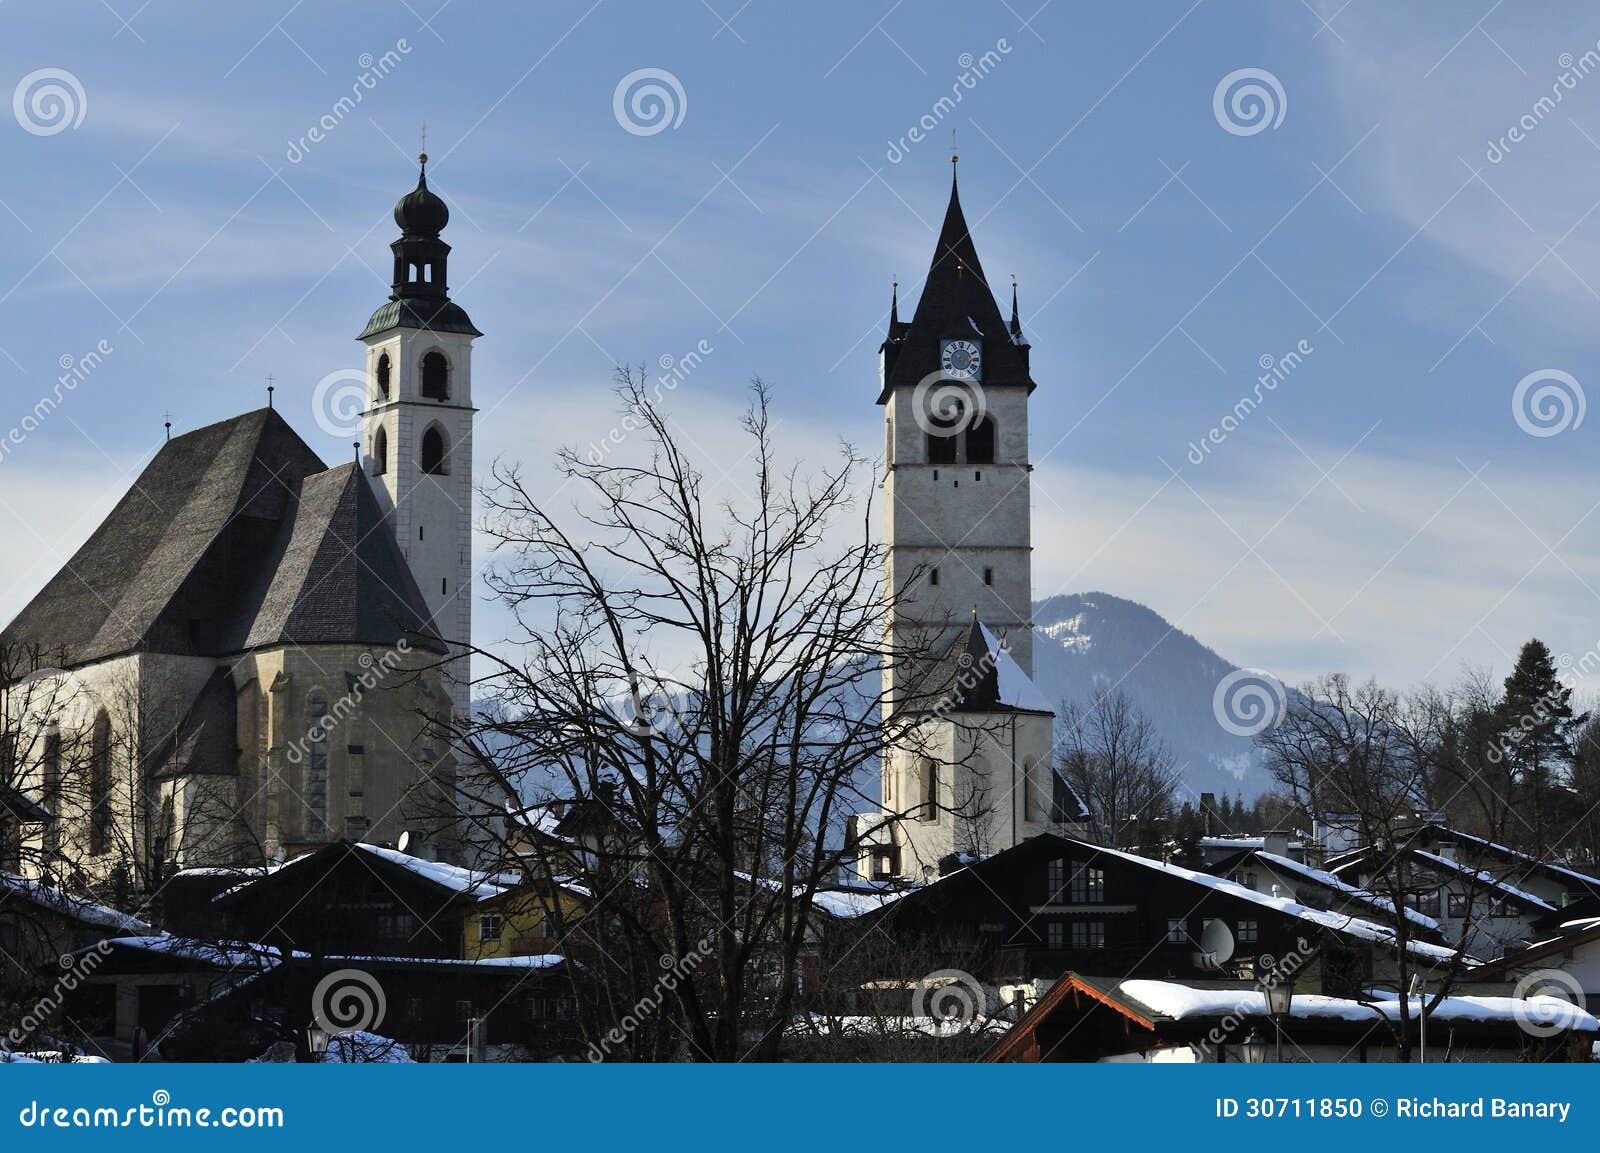 kitzbuhel's twin churches